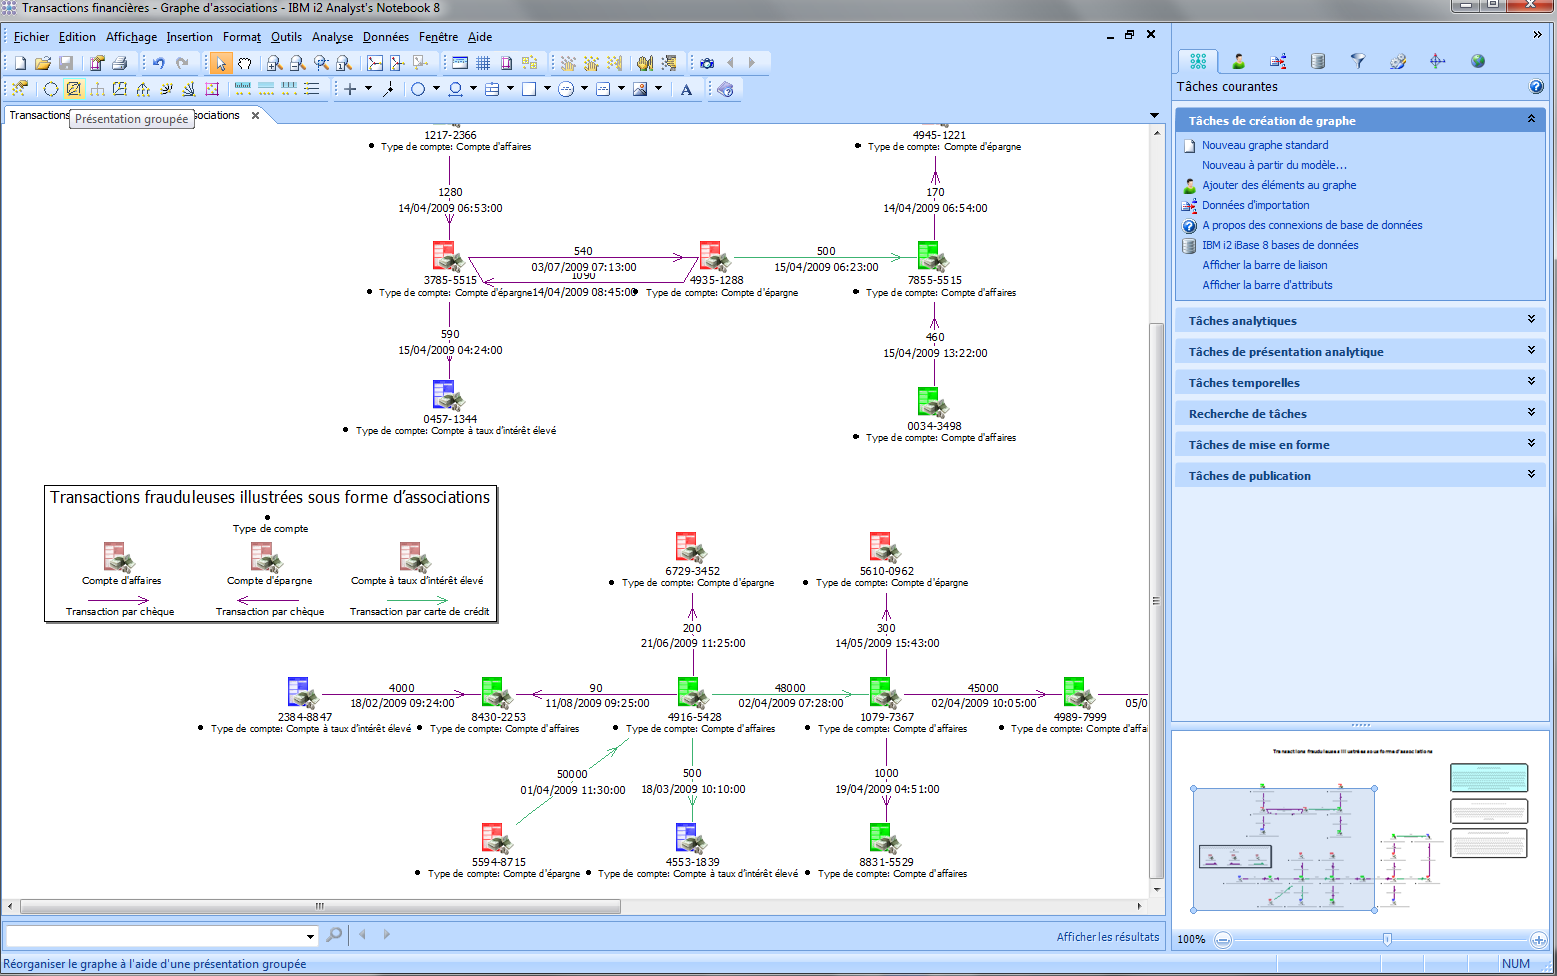 Exemple Analyse de transactions financières avec IBM i2 Analyst's Notebook